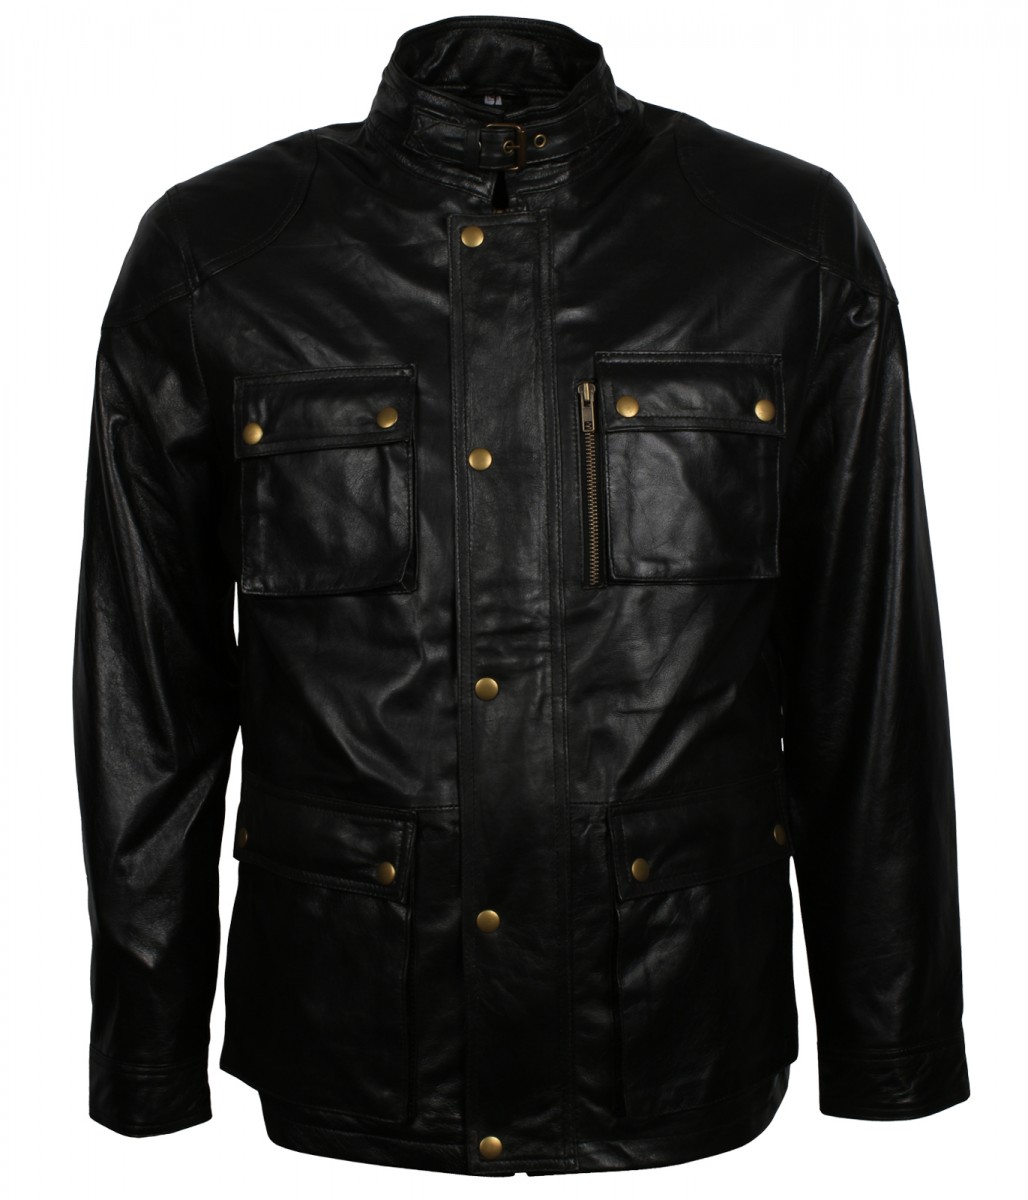 Black Leather Jacket Mens Four Pockets - Free Shipping Worldwide